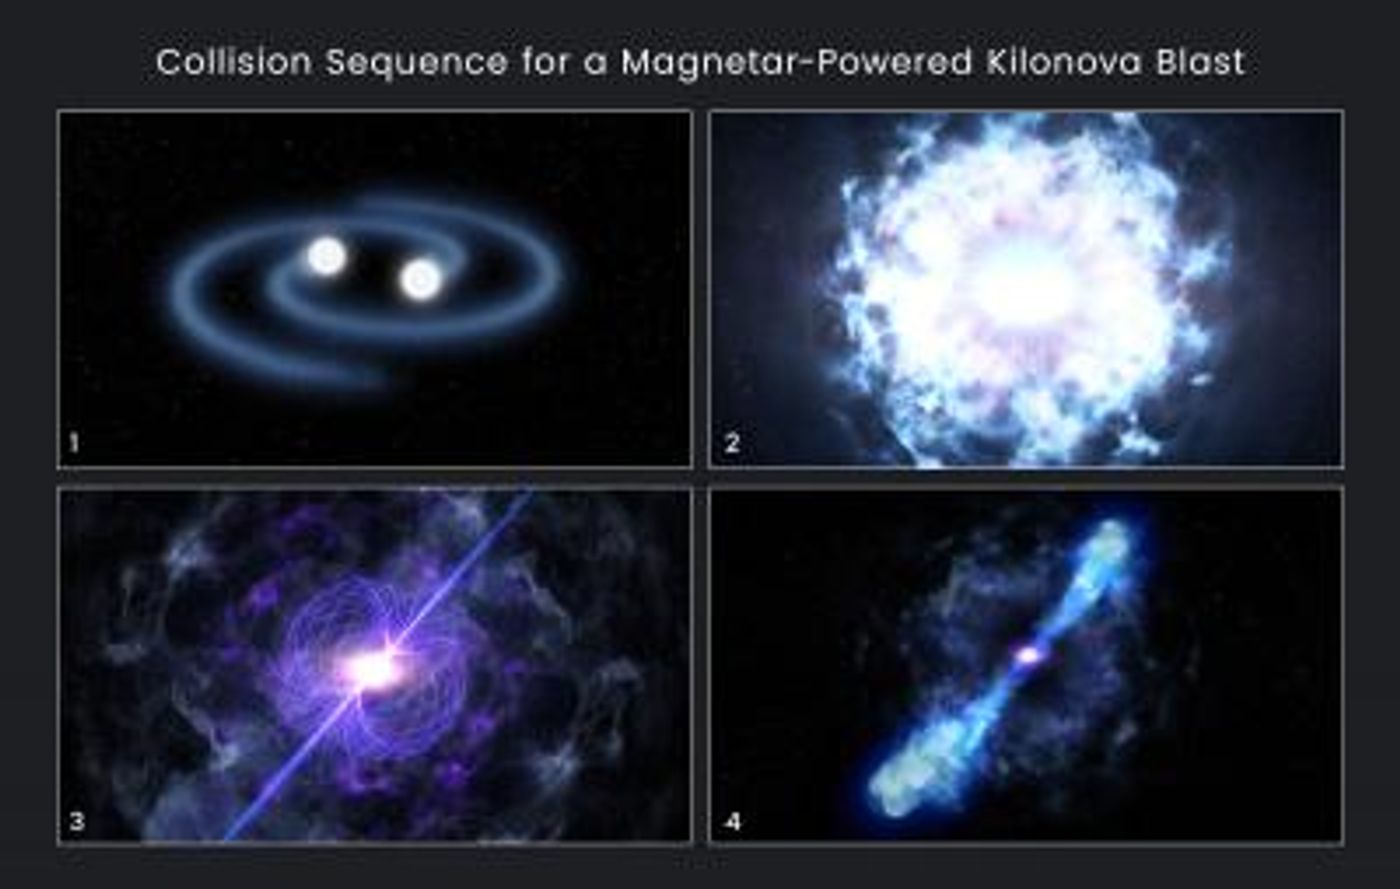 Collision sequence for a magnetar-powered kilonova blast / Credit: NASA, ESA, and D. Player (STScI)